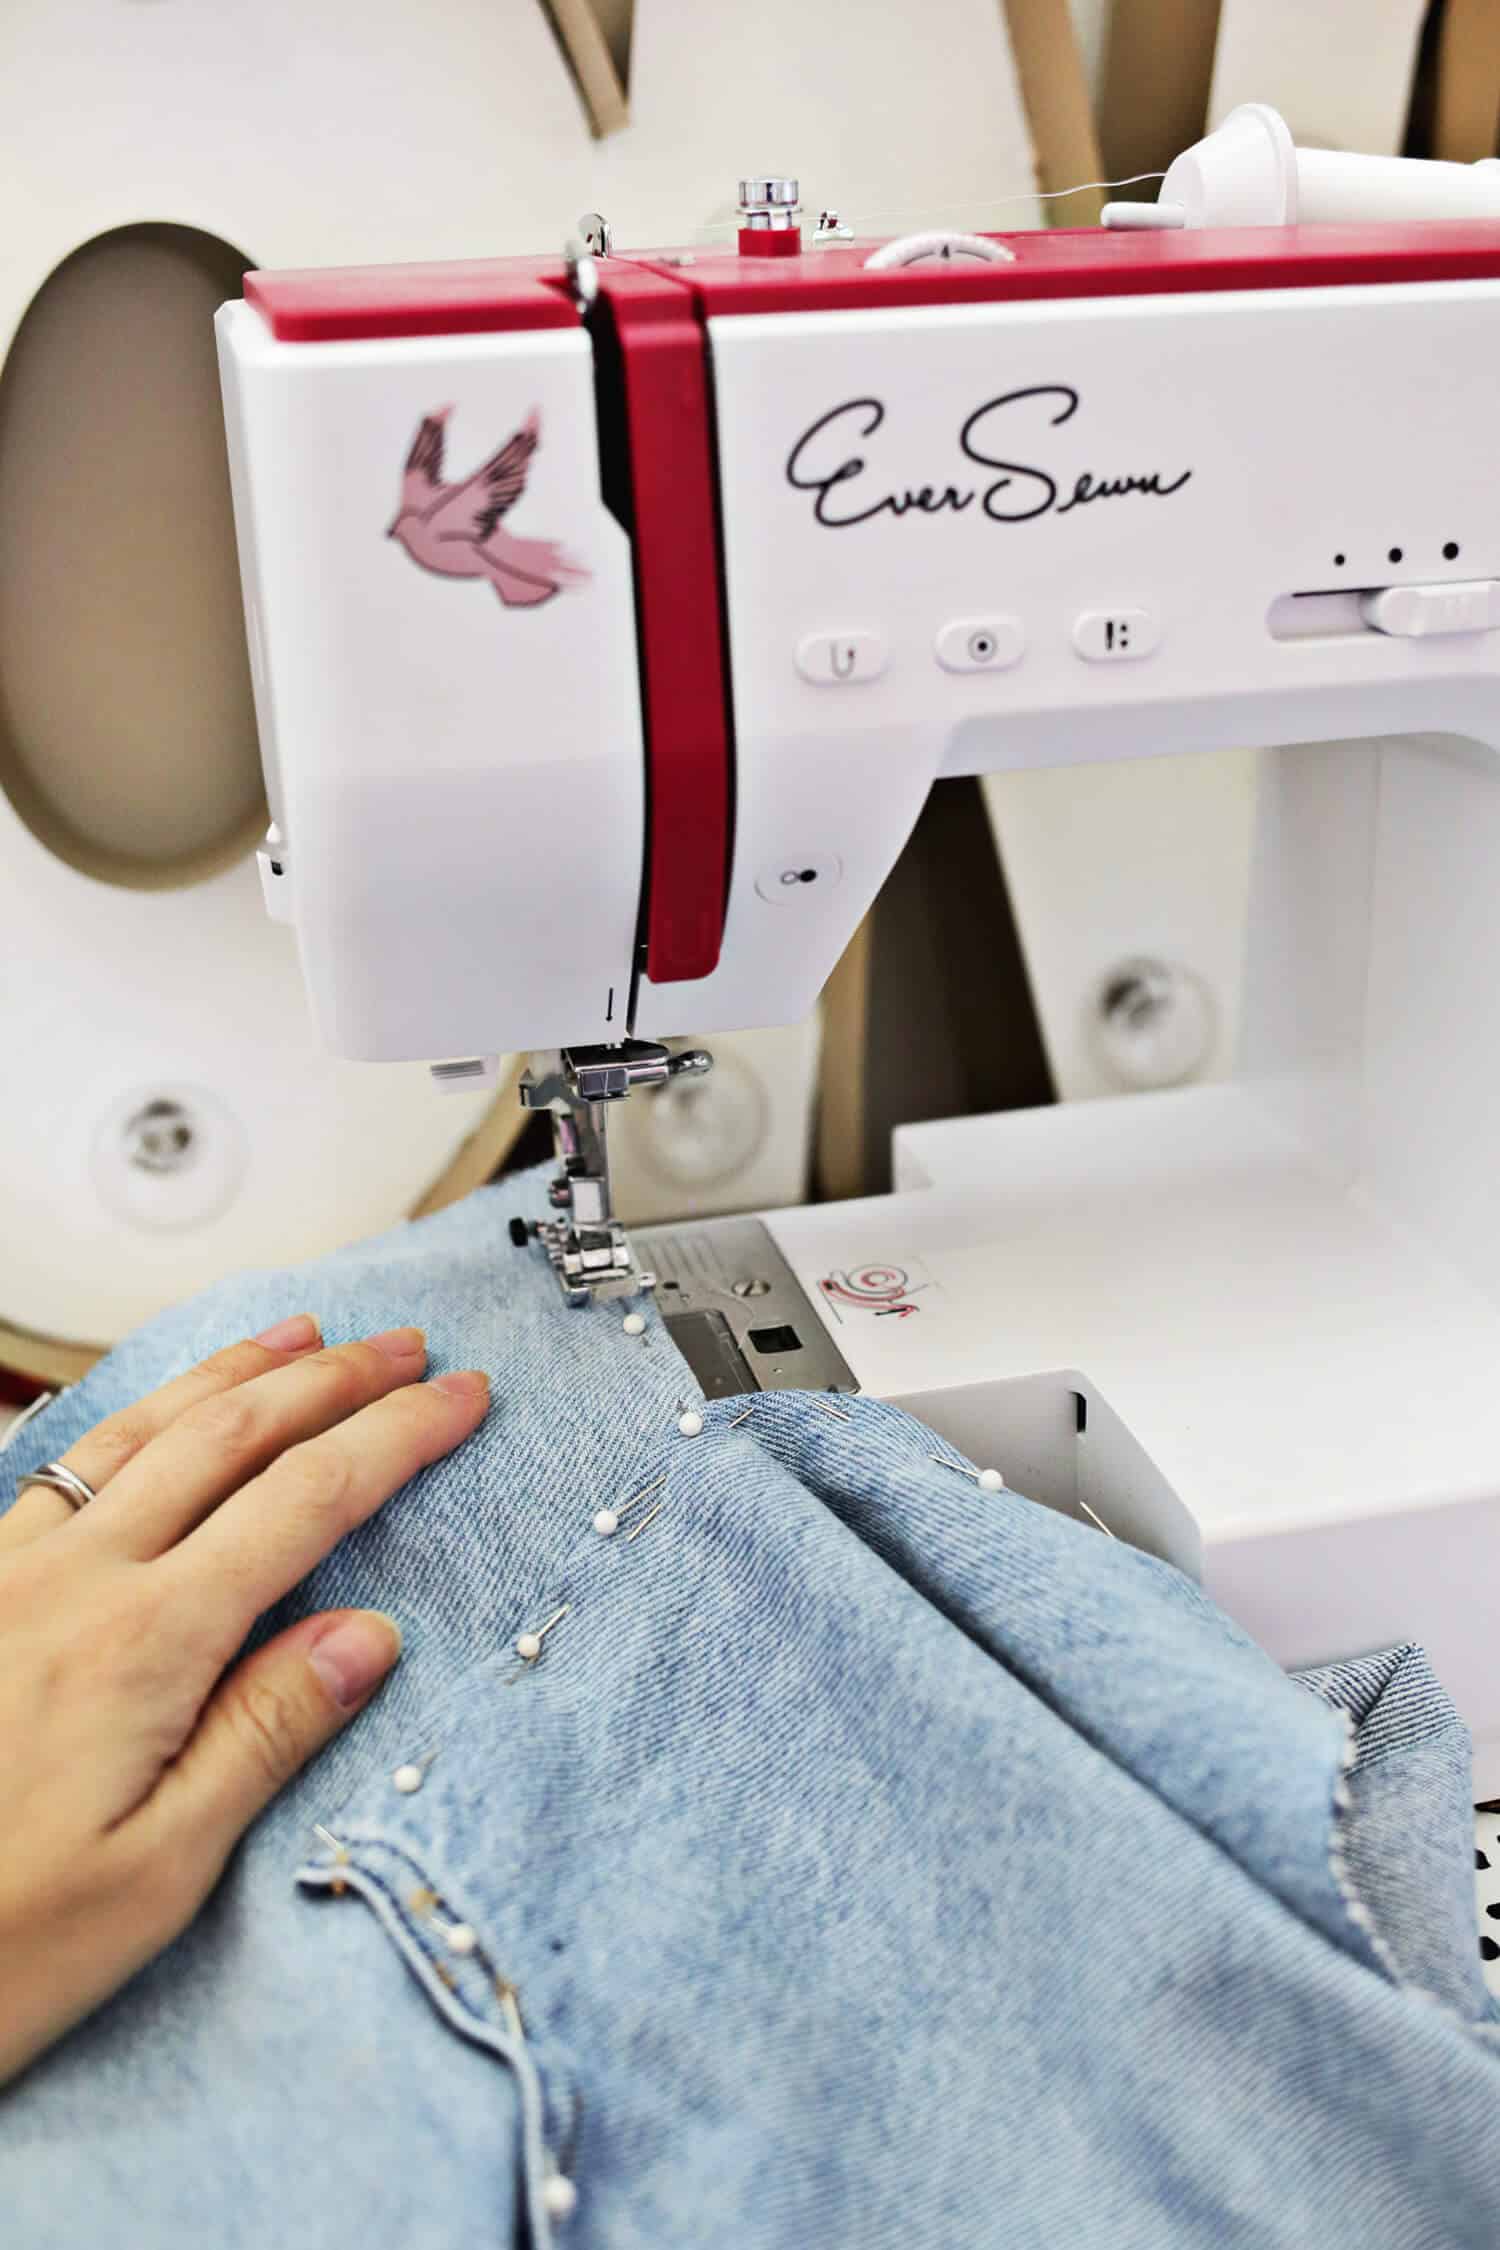 100% Cotton Denim Handmade in Sewing Machine Unique Design For RocknRoll Fashion Fancy Stylish Jean Skirt M sized